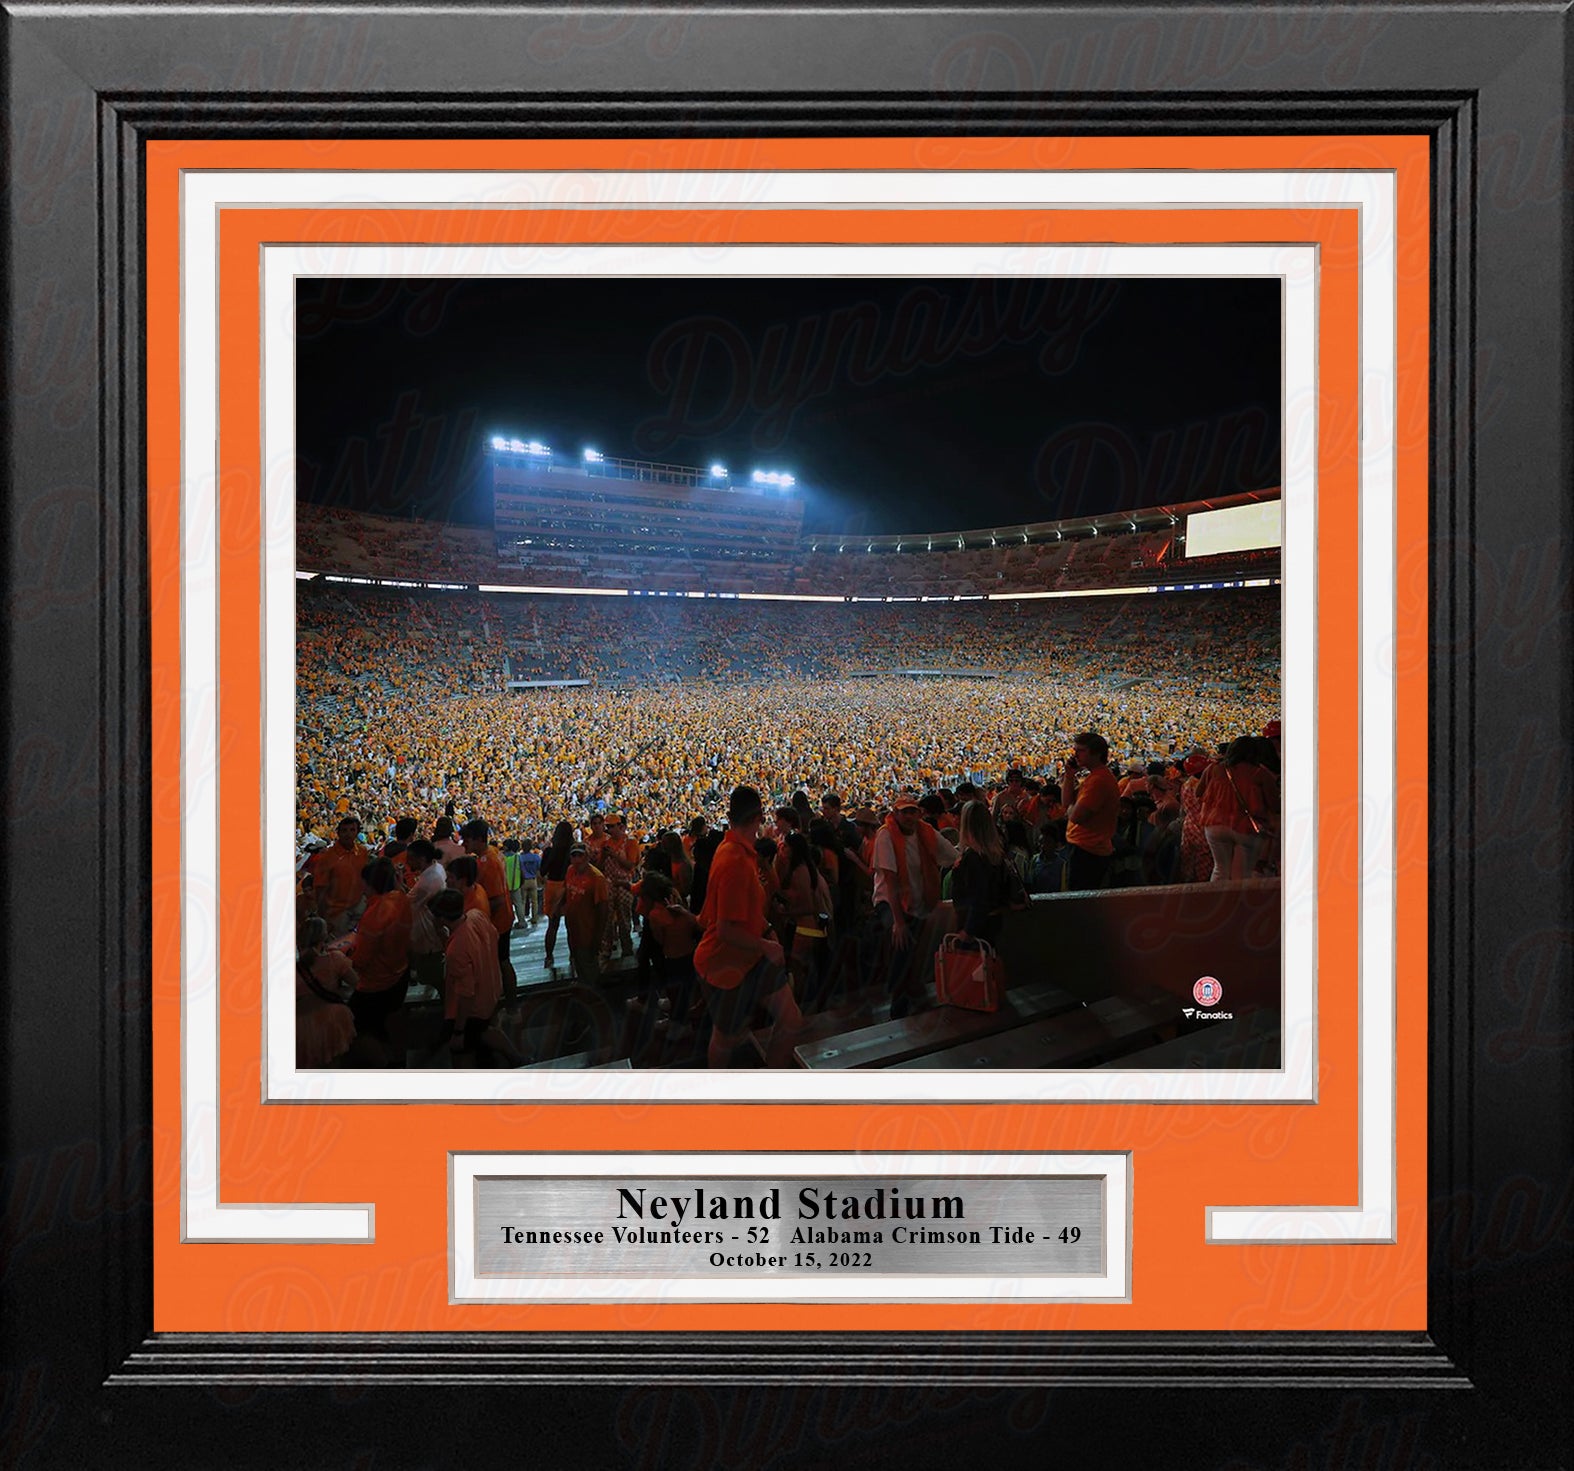 Tennessee Volunteers Neyland Stadium Victory Over Alabama 8" x 10" Framed College Football Photo - Dynasty Sports & Framing 